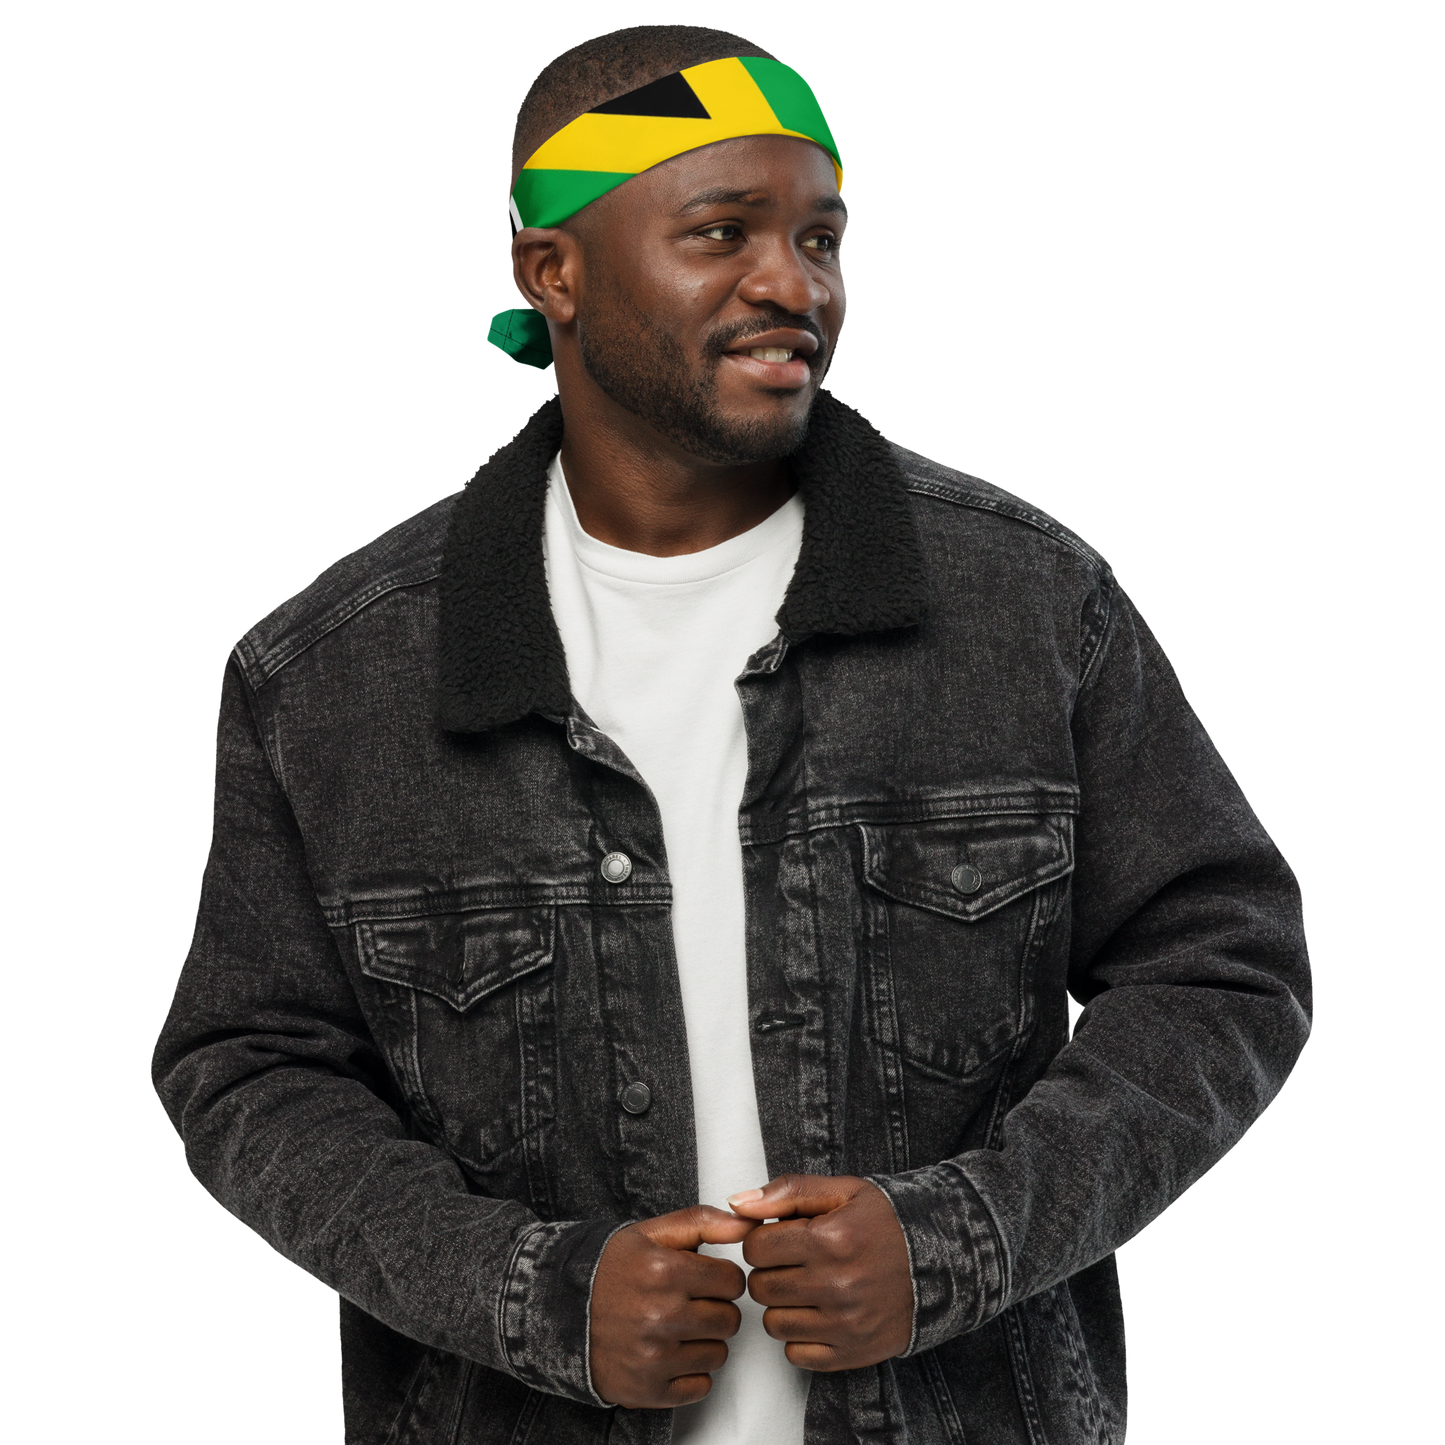 Jamaica bandana